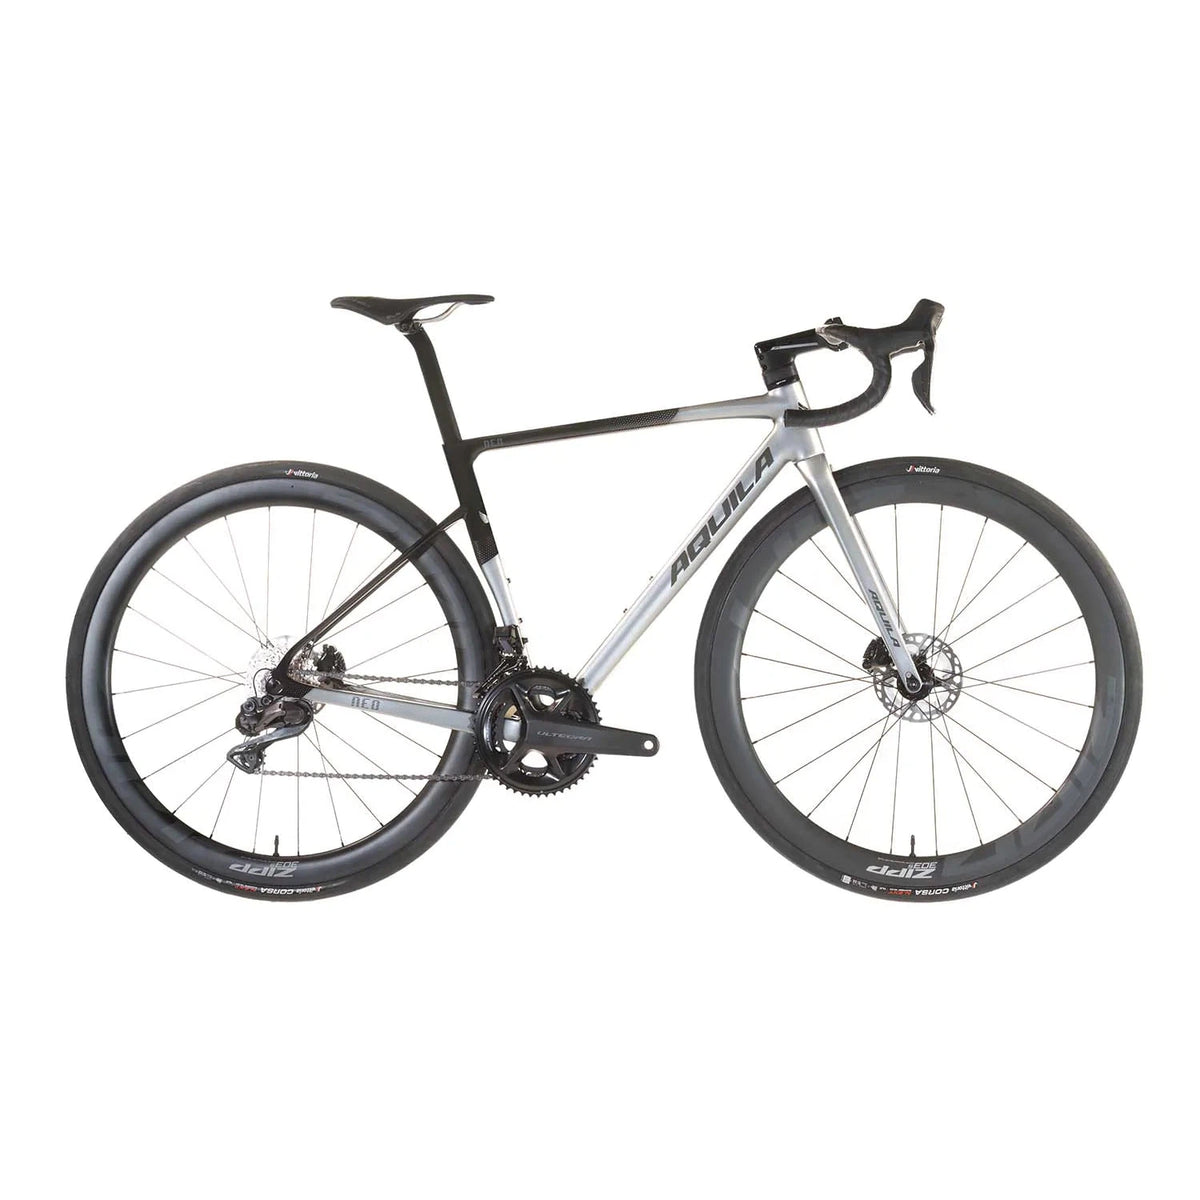 Aquila NEO 2.0 - Shimano Ultegra R8170 Di2 Road Bike